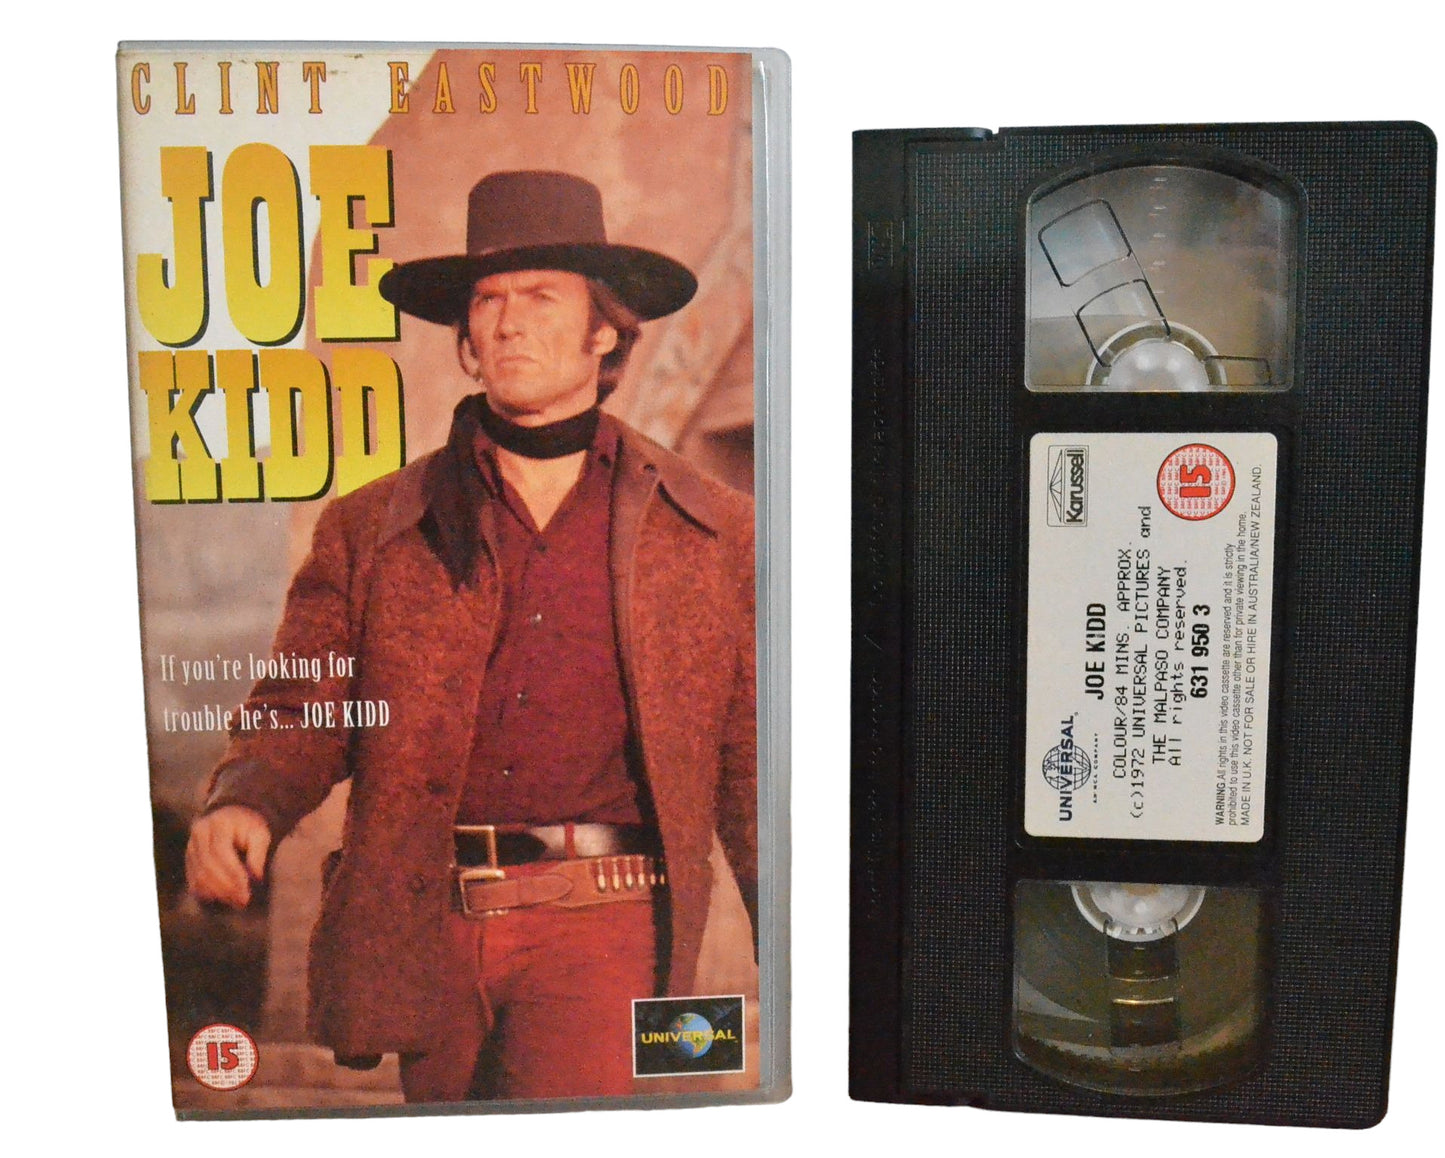 Joe Kidd - Clint Eastwood - Universal Video - 6319503 - Action - Pal - VHS-